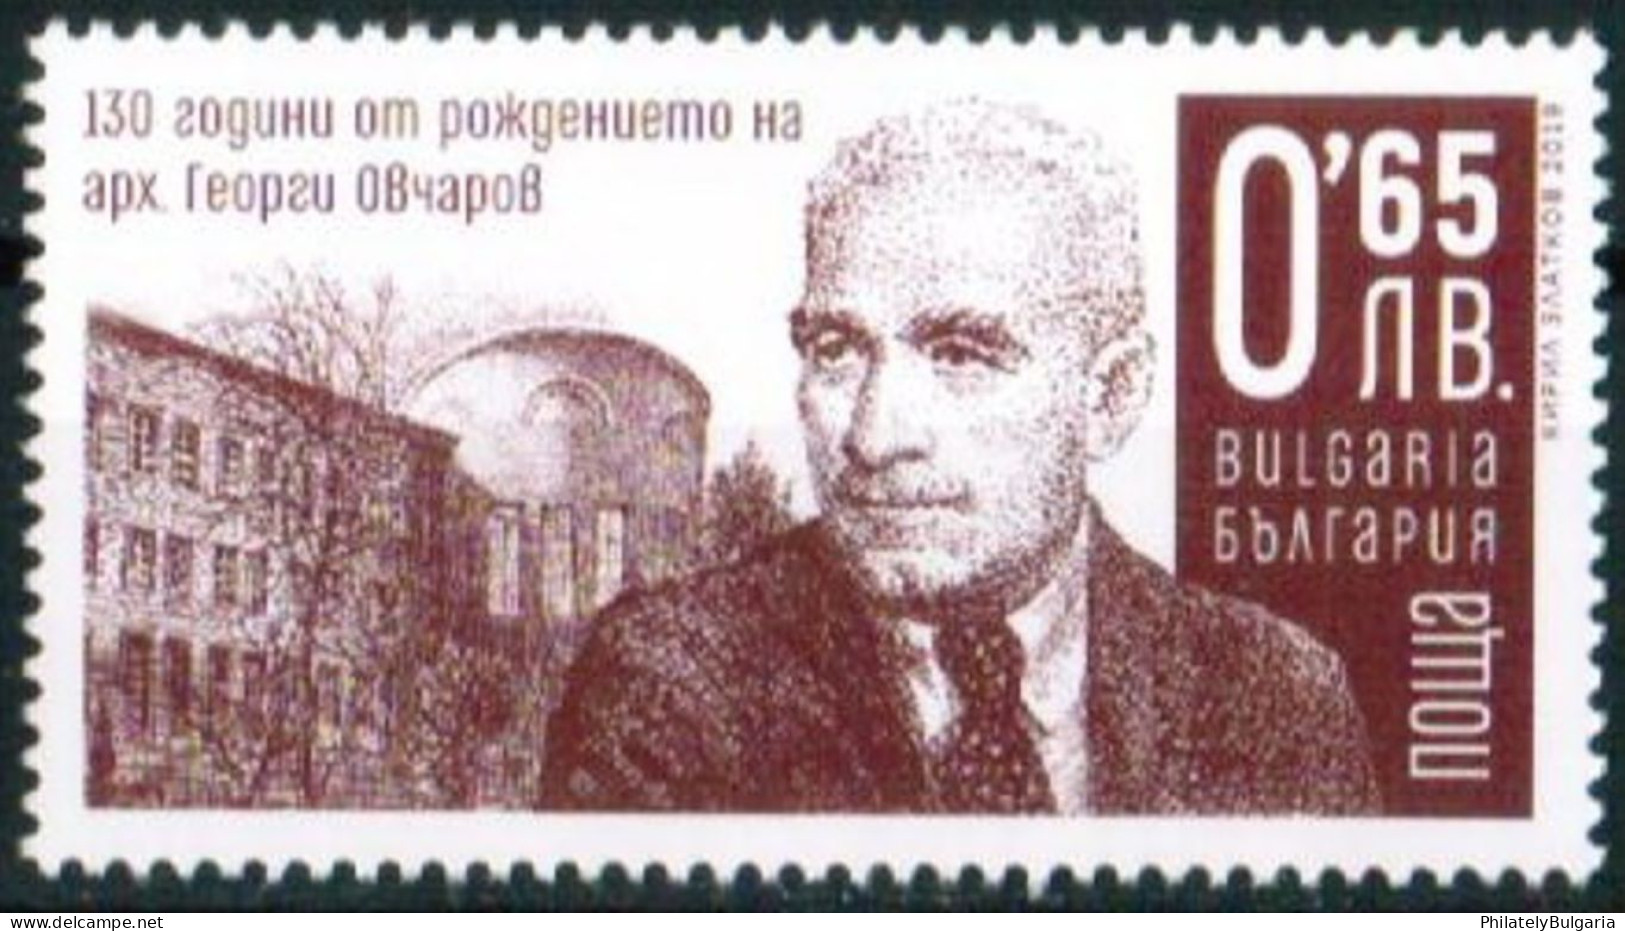 Bulgaria 2019 - 130th Birth Anniversary Of Architect Georgi Ovcharov – One Postage Stamp MNH - Ungebraucht